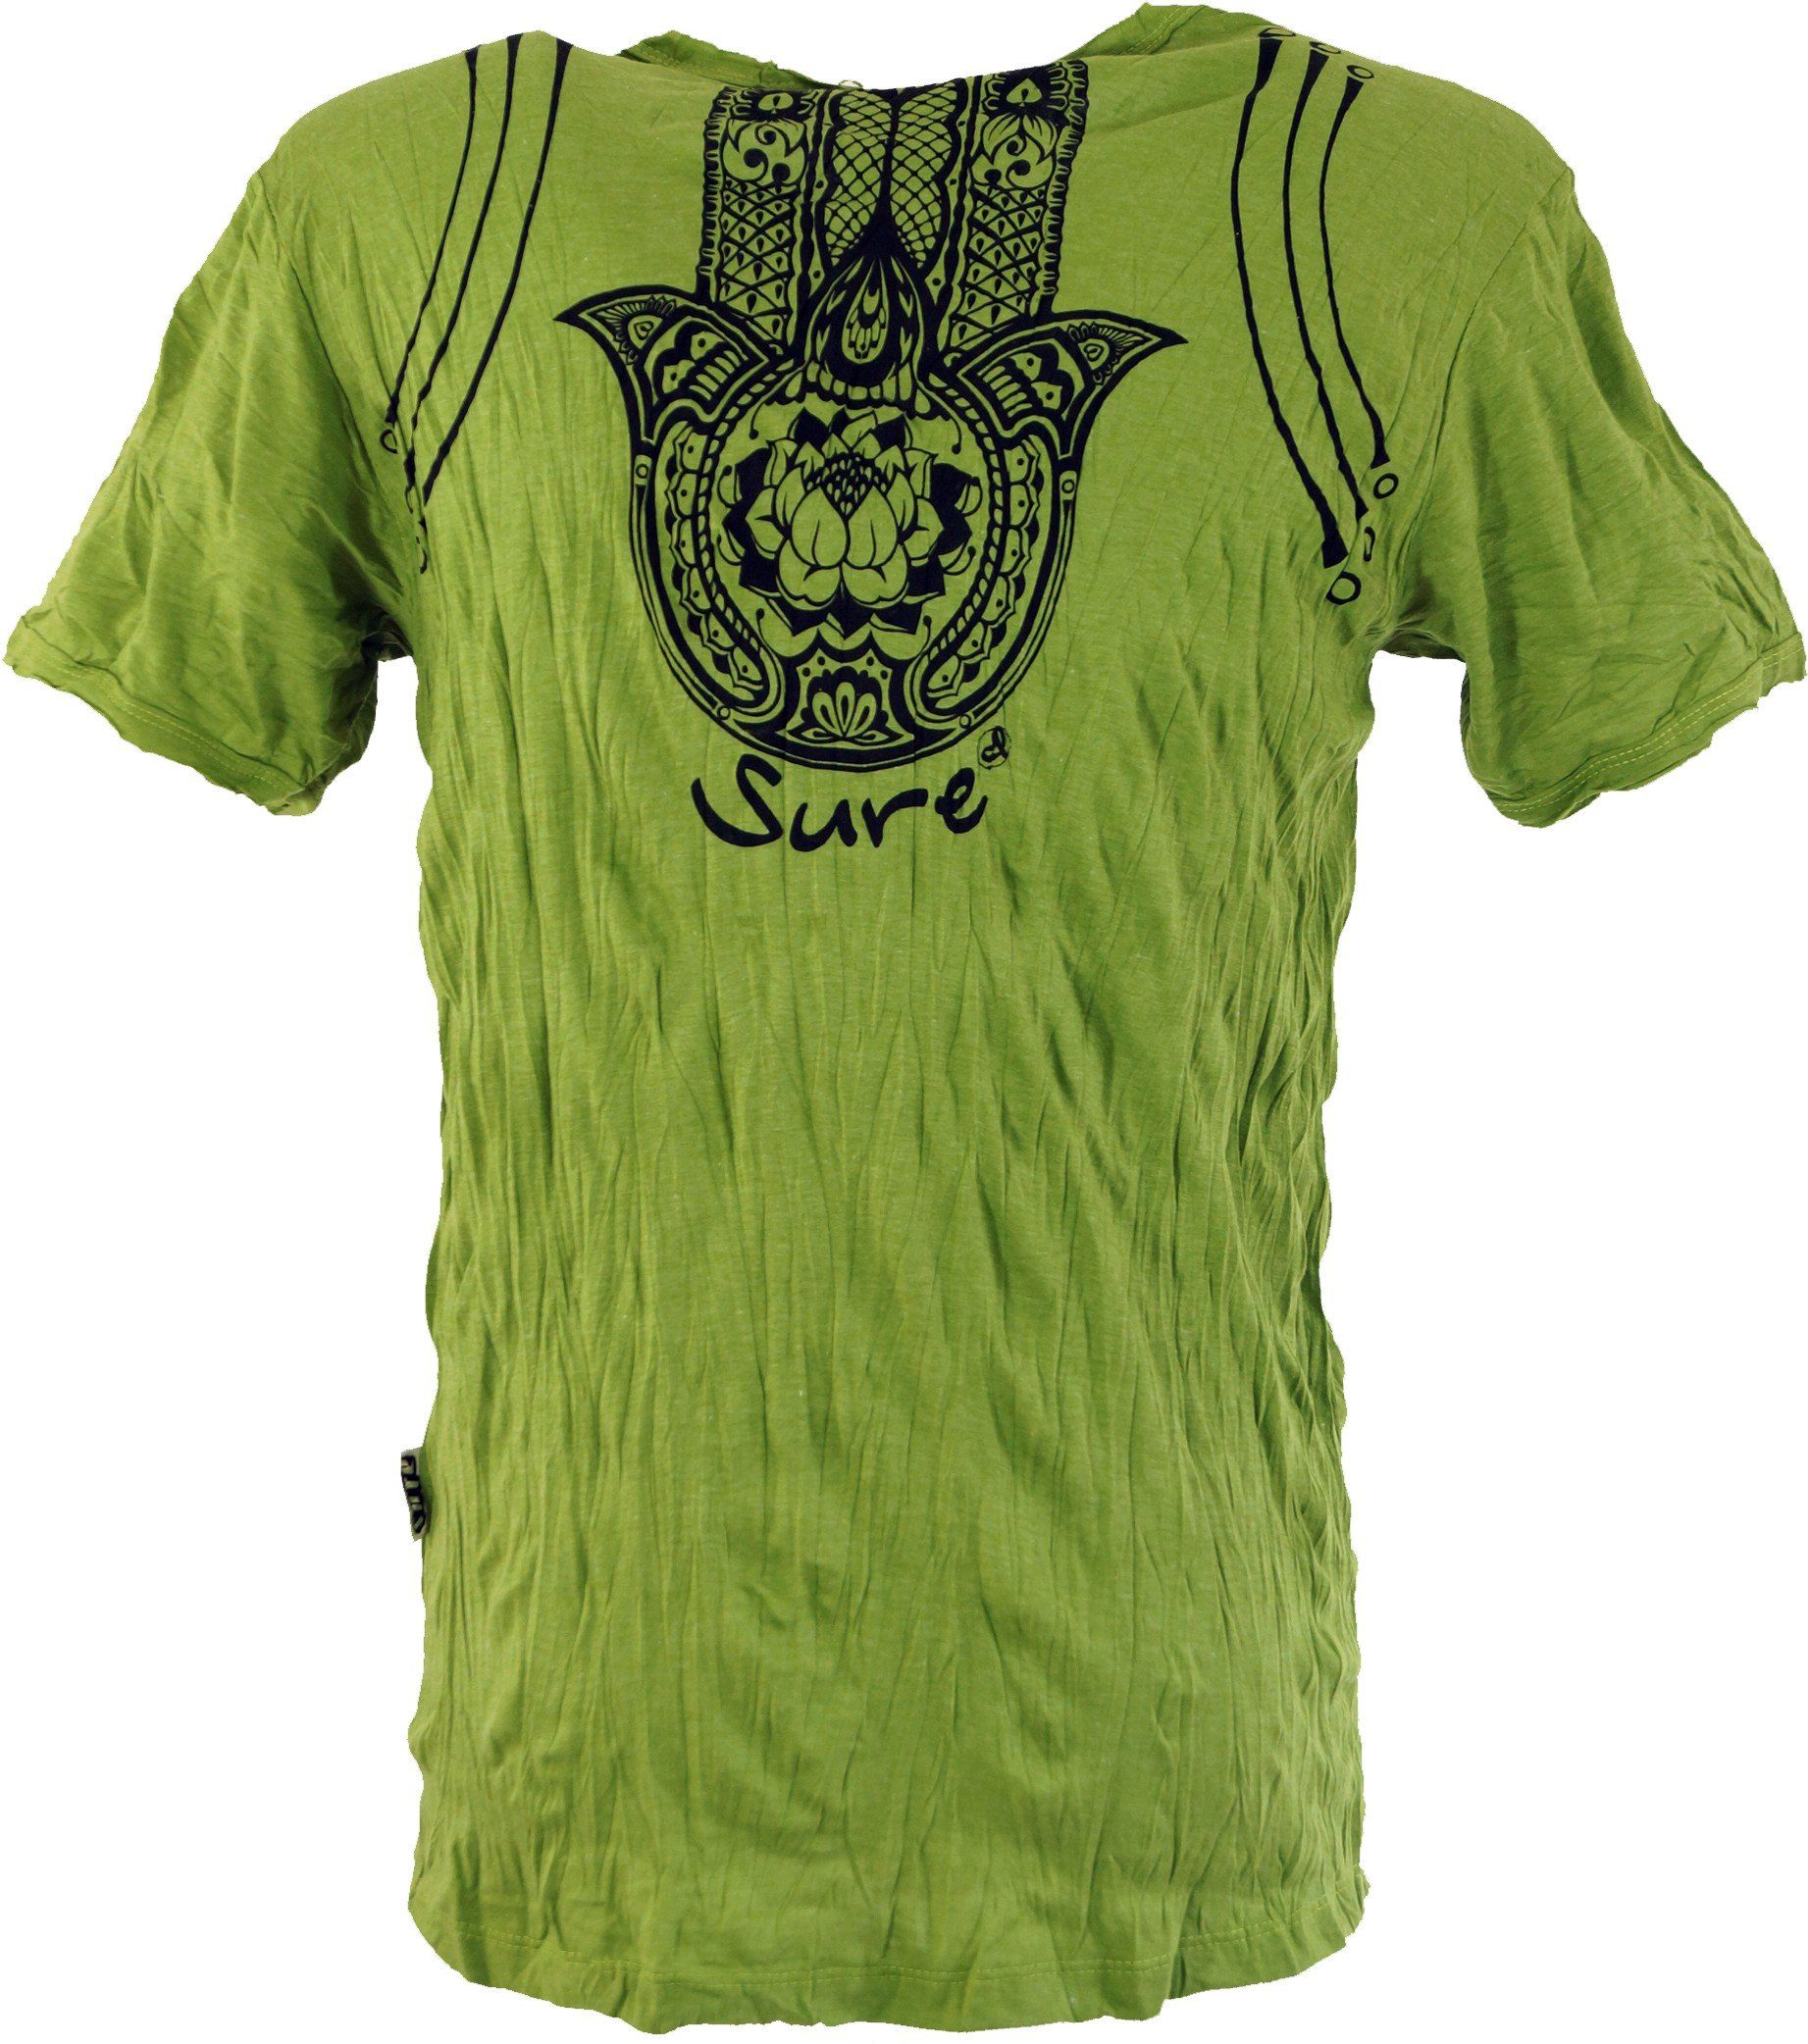 T-Shirt Sure Goa Festival, Guru-Shop T-Shirt Style, lemon Fatimas - Hand alternative Bekleidung